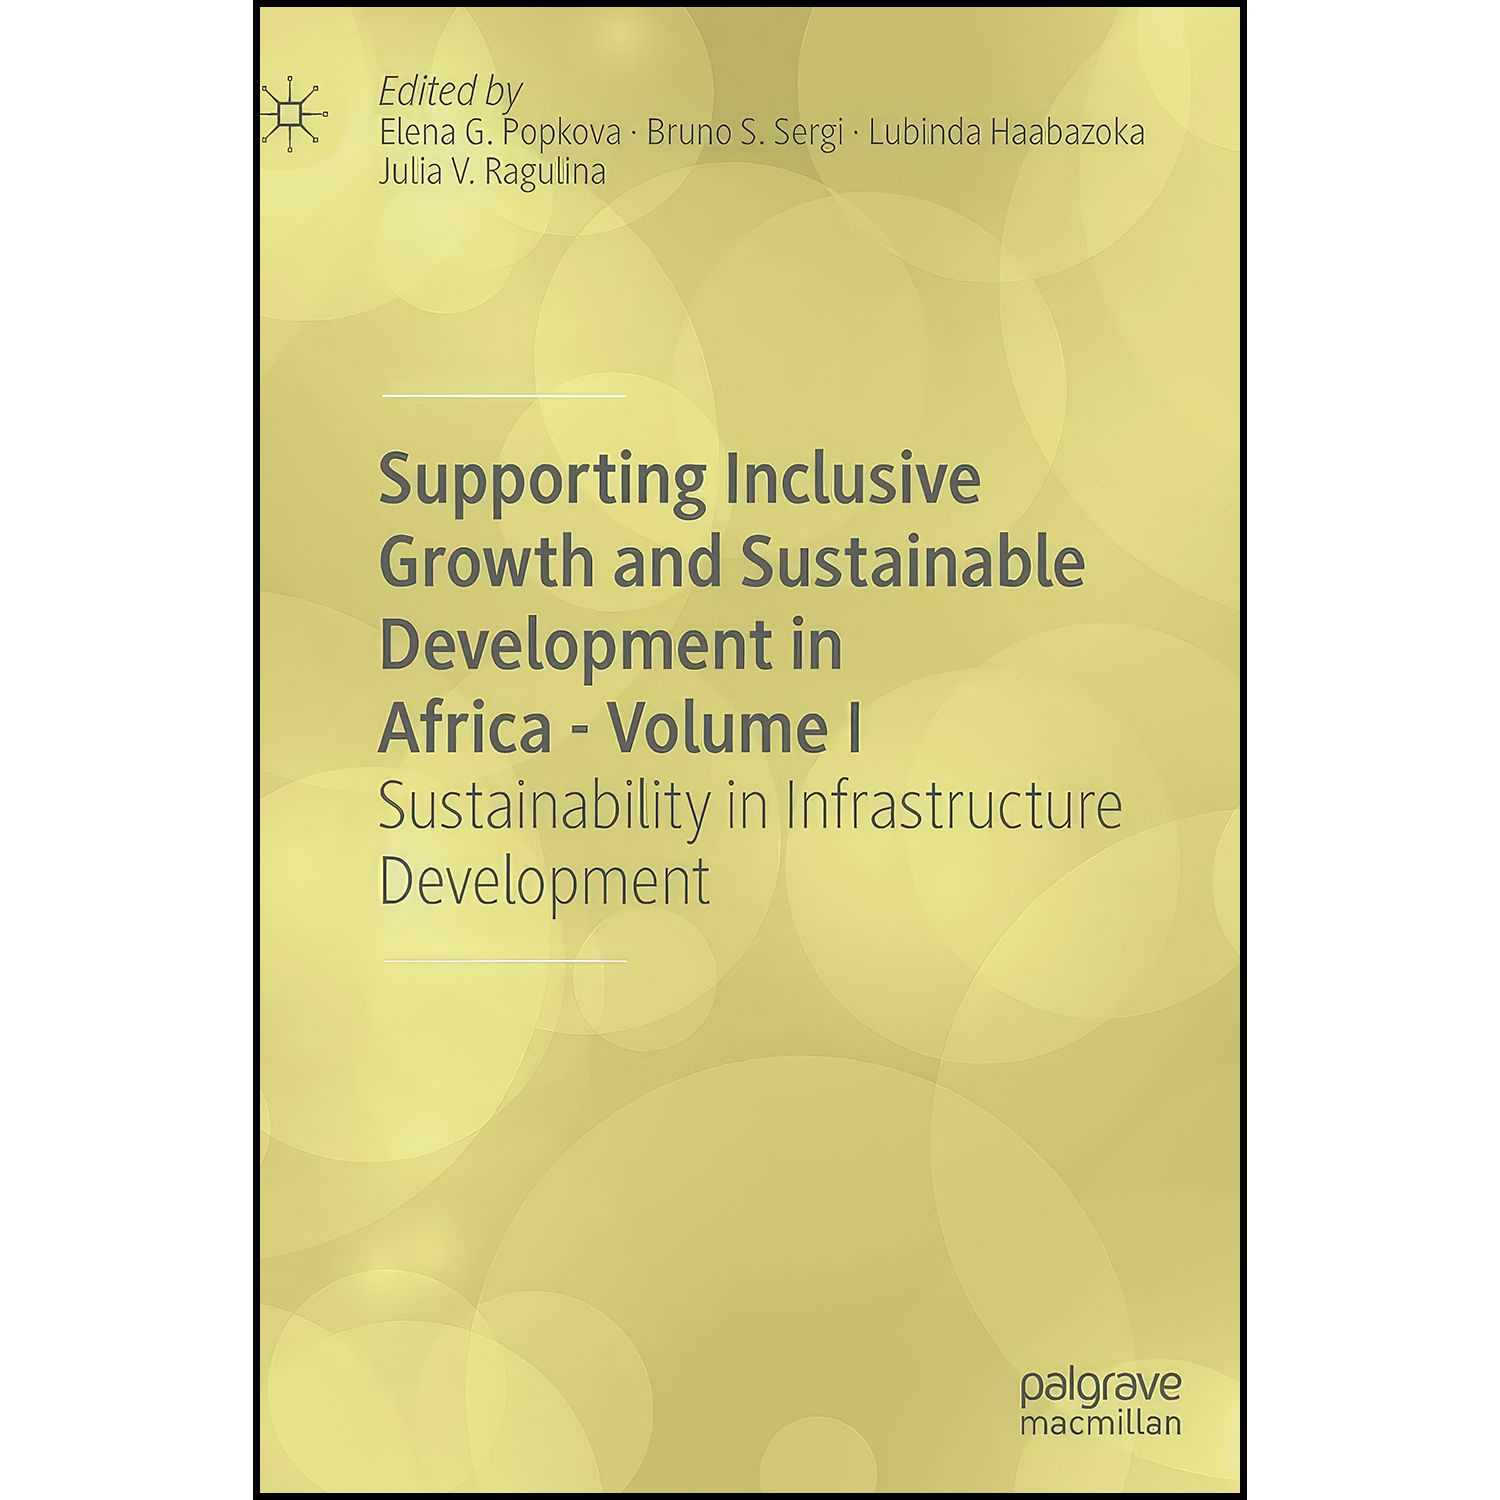 کتاب Supporting Inclusive Growth and Sustainable Development in Africa - Volume I اثر جمعي از نويسندگان انتشارات Palgrave Macmillan